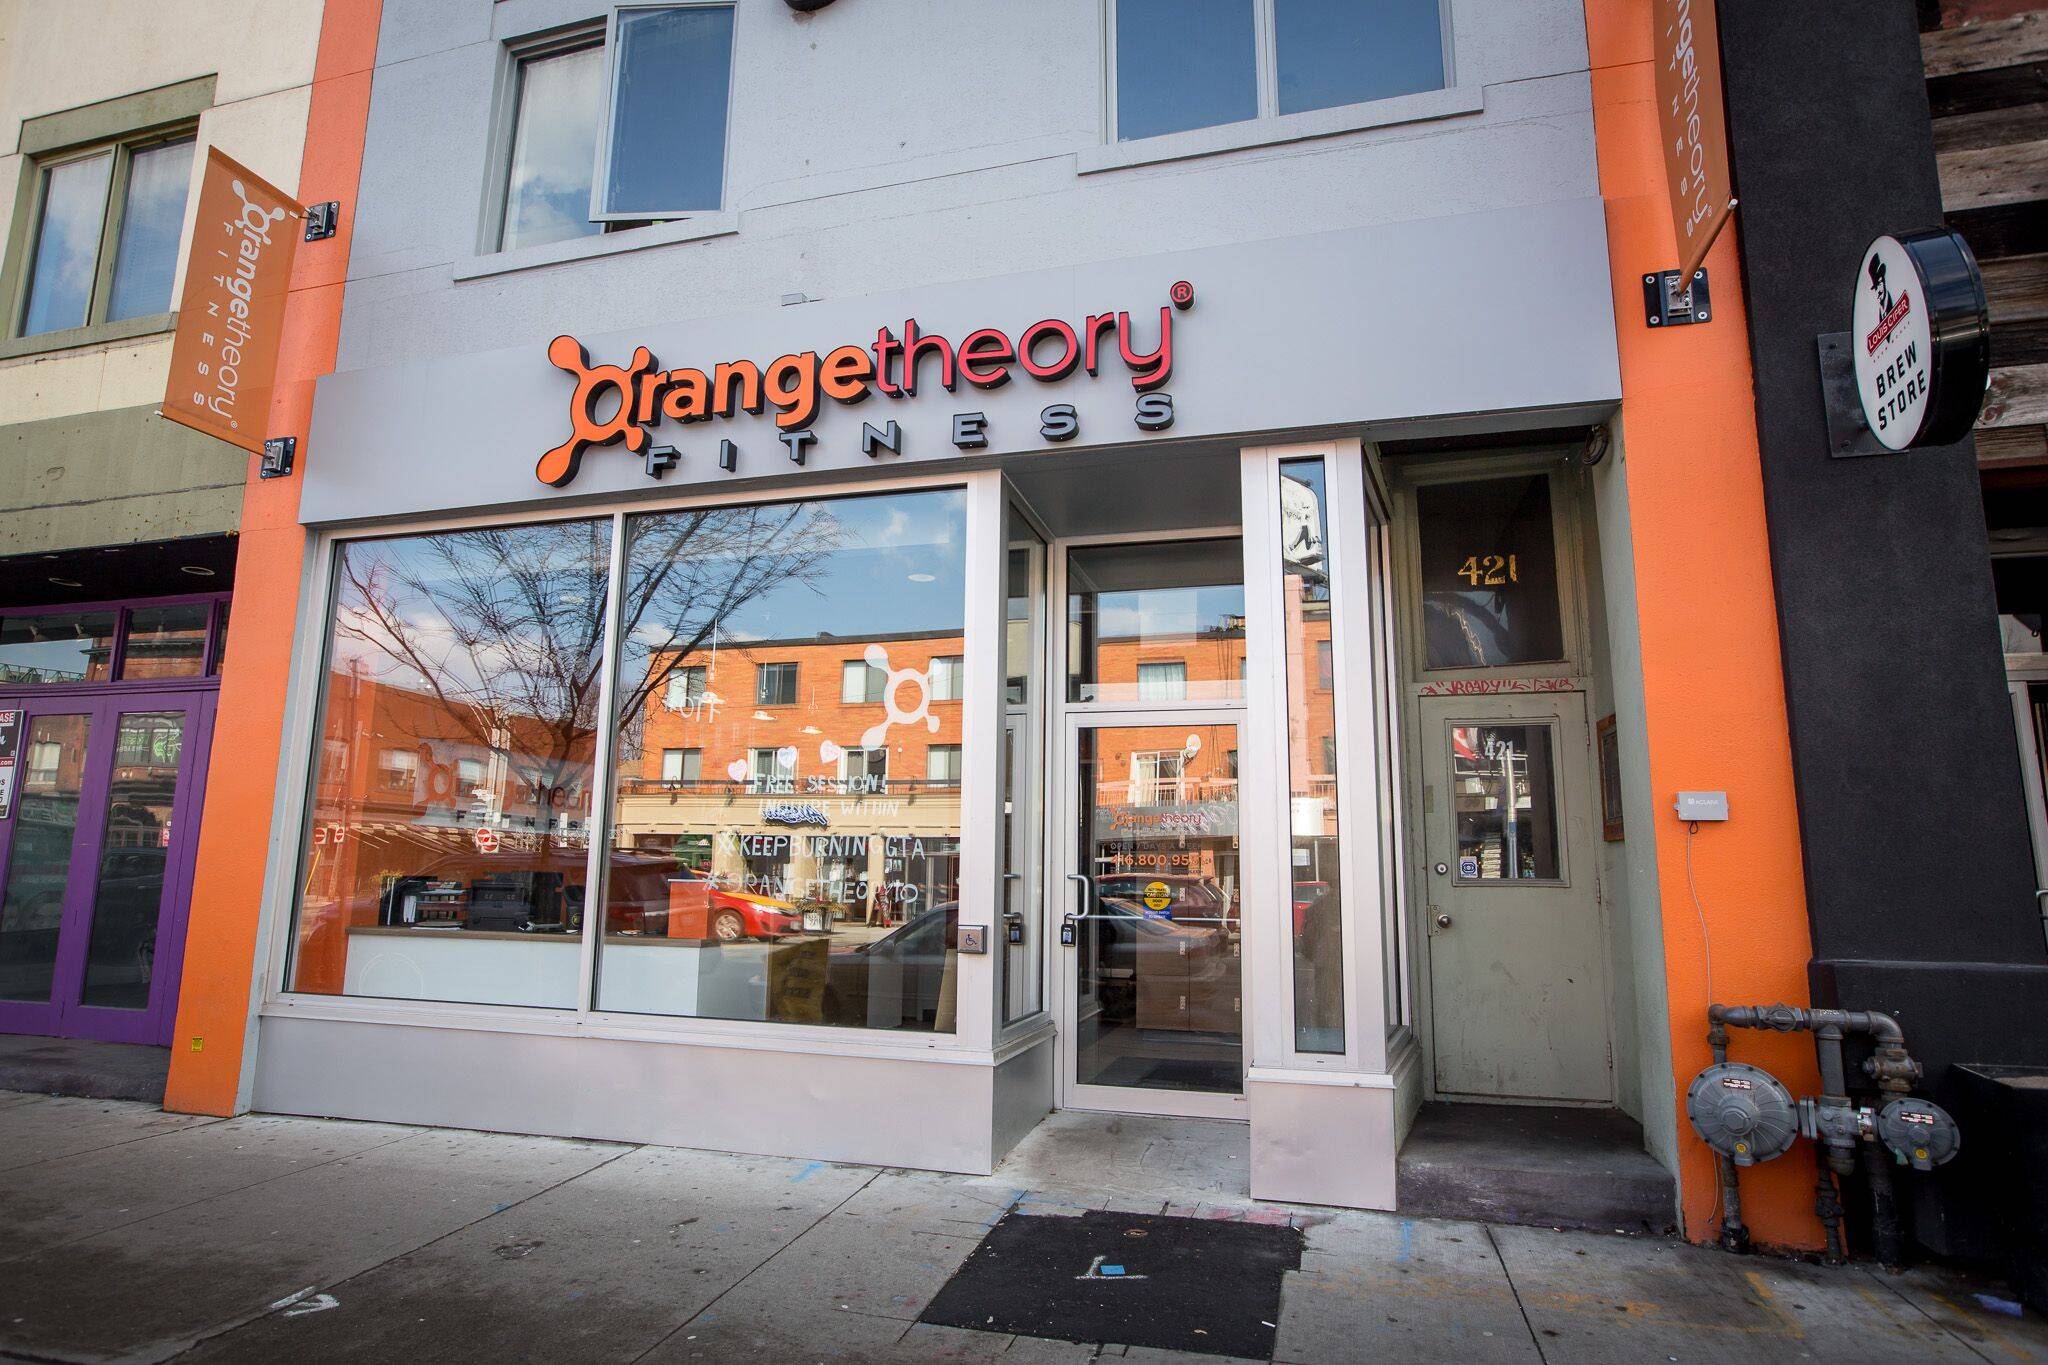 Popular Orangetheory Fitness location abruptly shuts down in Toronto